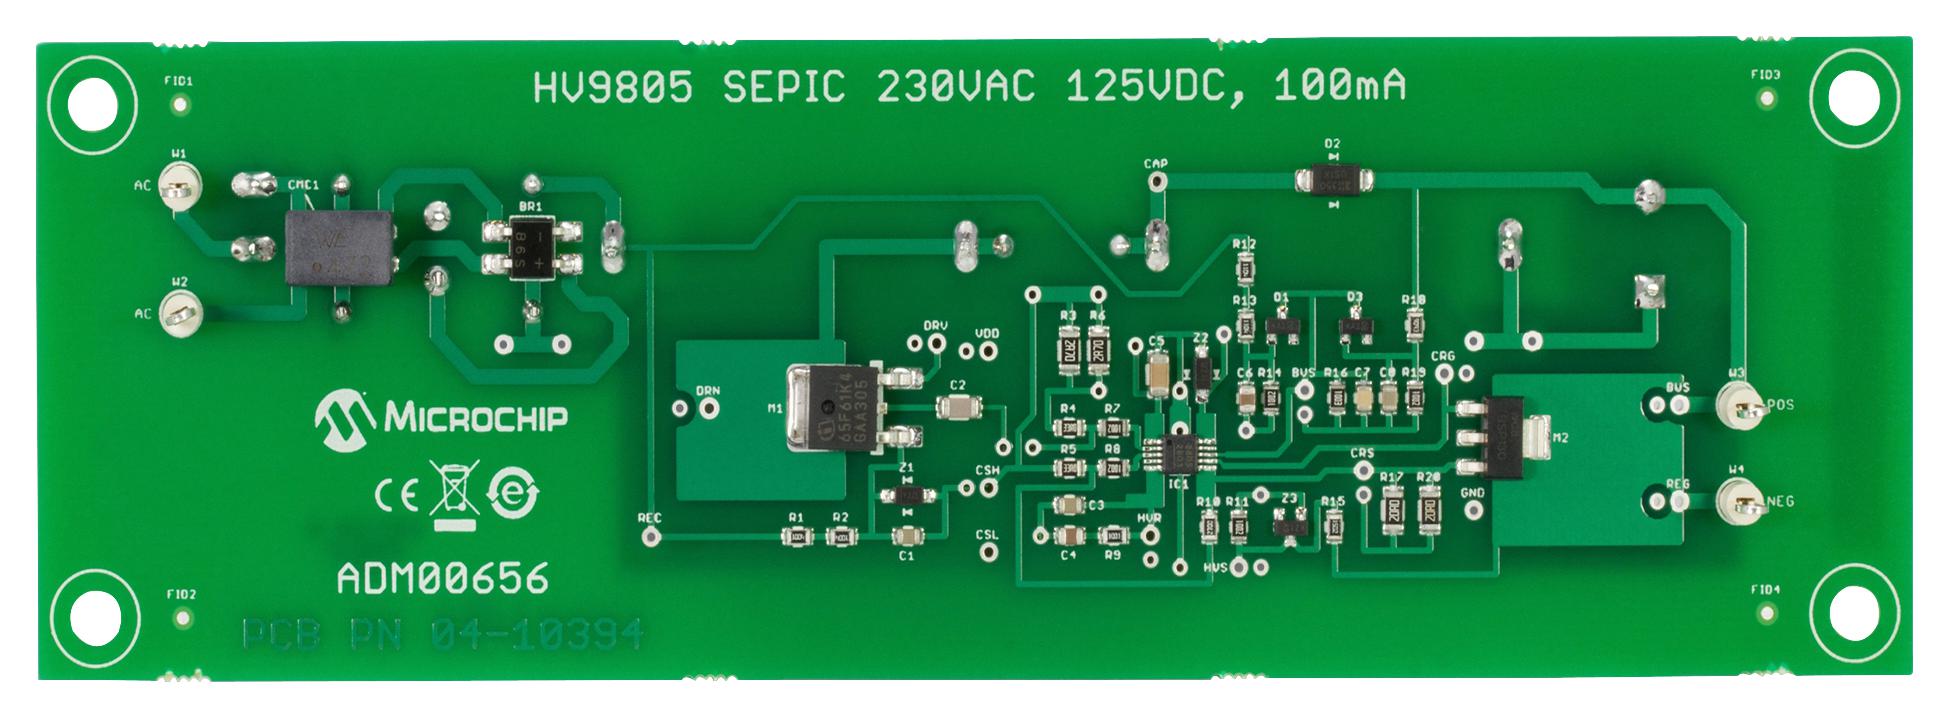 ADM00656 EVAL BOARD, HV9805 OFF-LINE LED DRIVER MICROCHIP